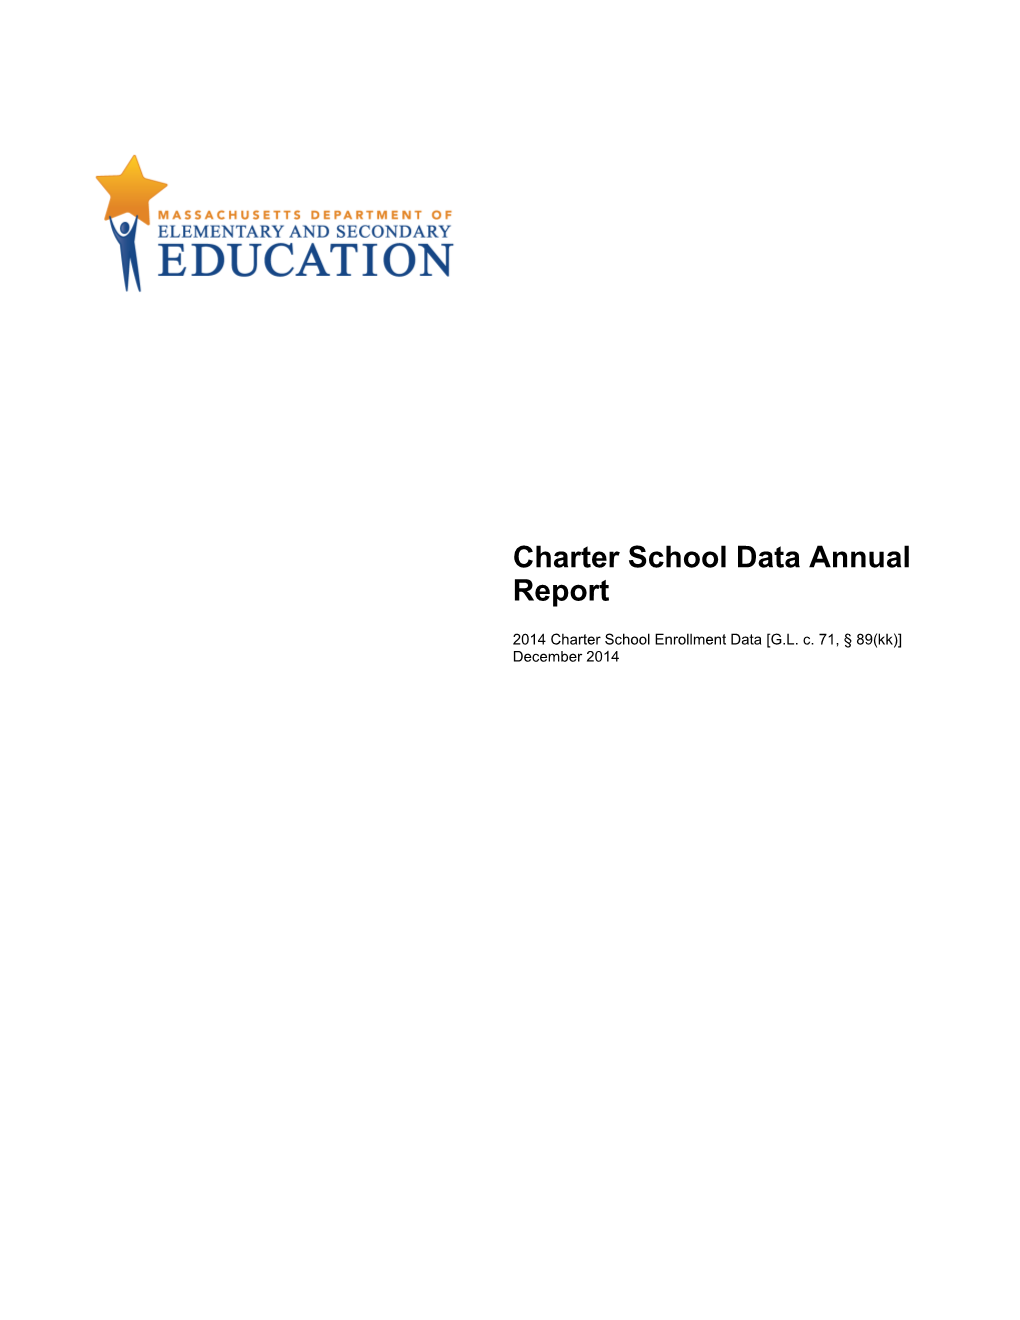 Charter School Data Annual Report (December 2014)